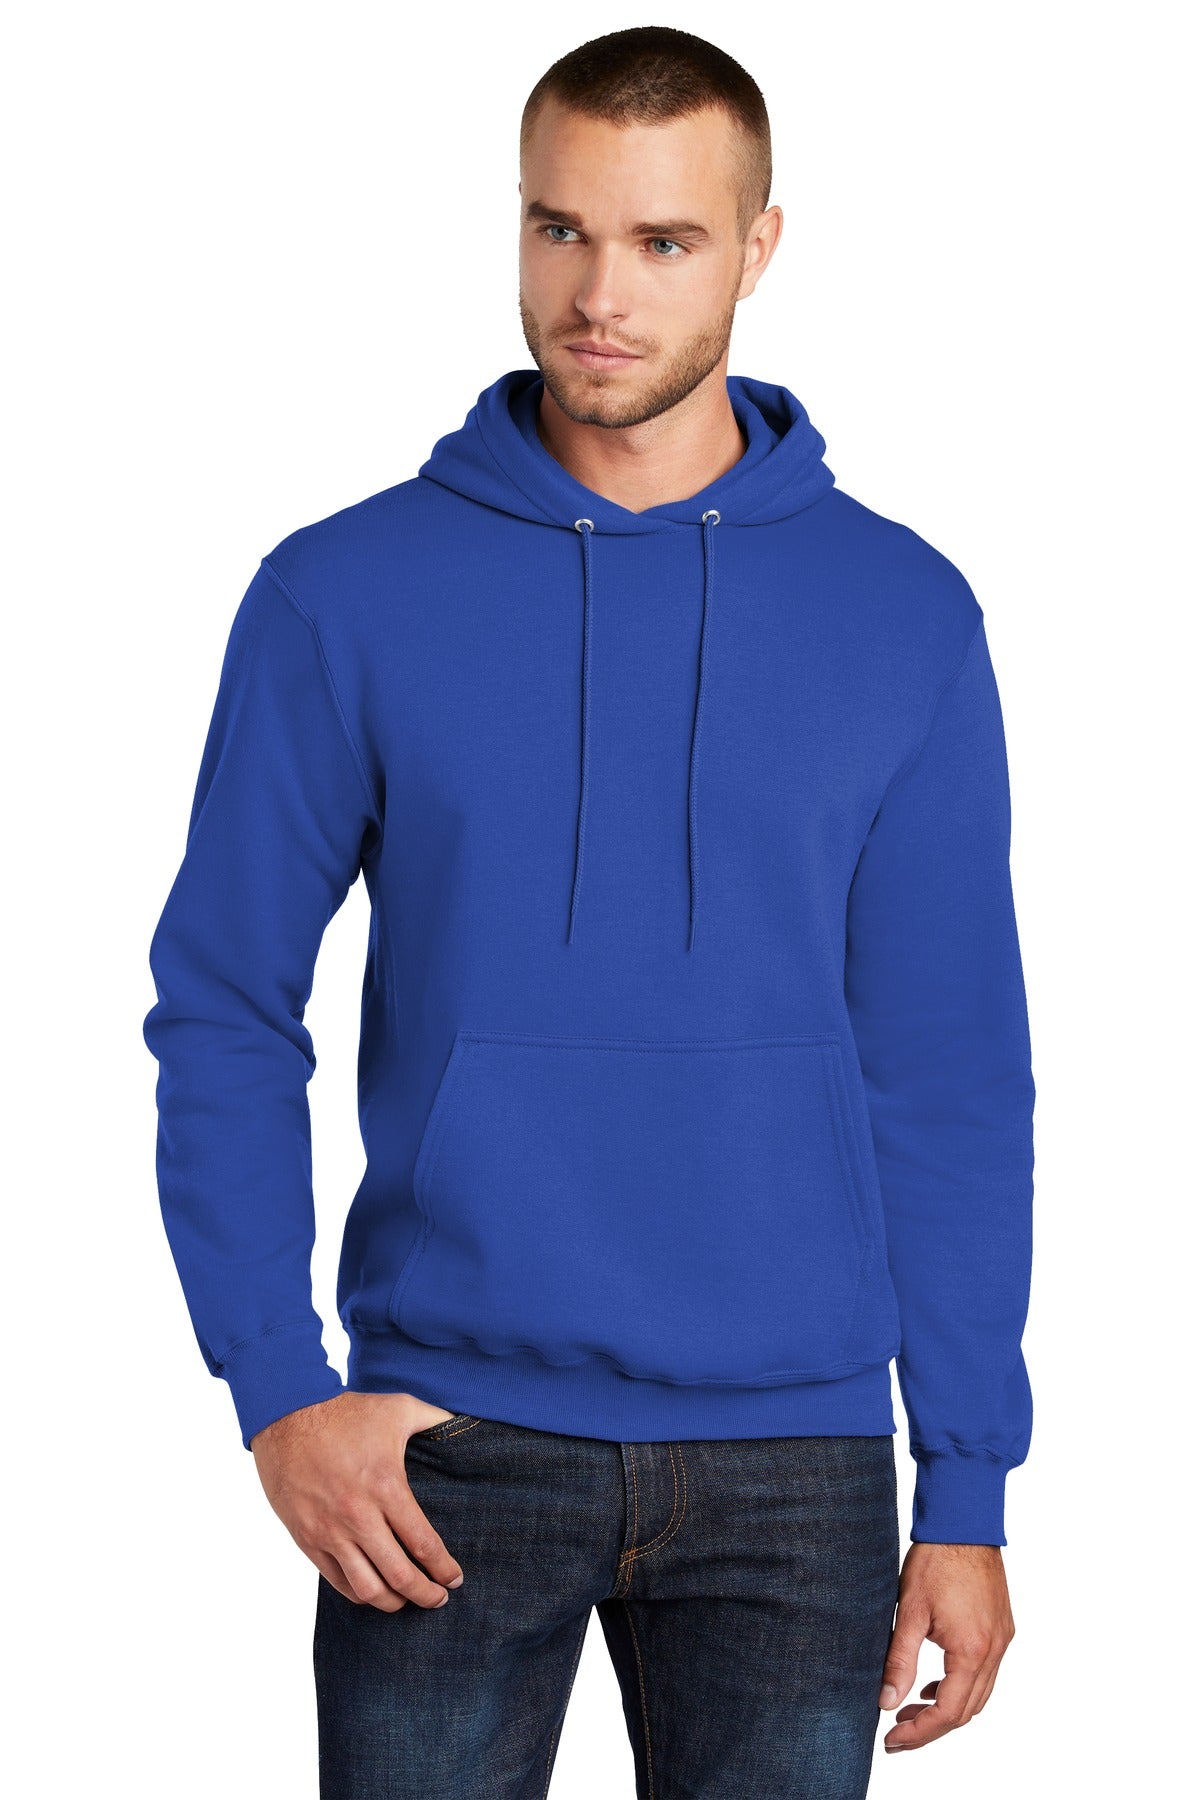 Sweatshirts/Fleece True Royal Port & Company